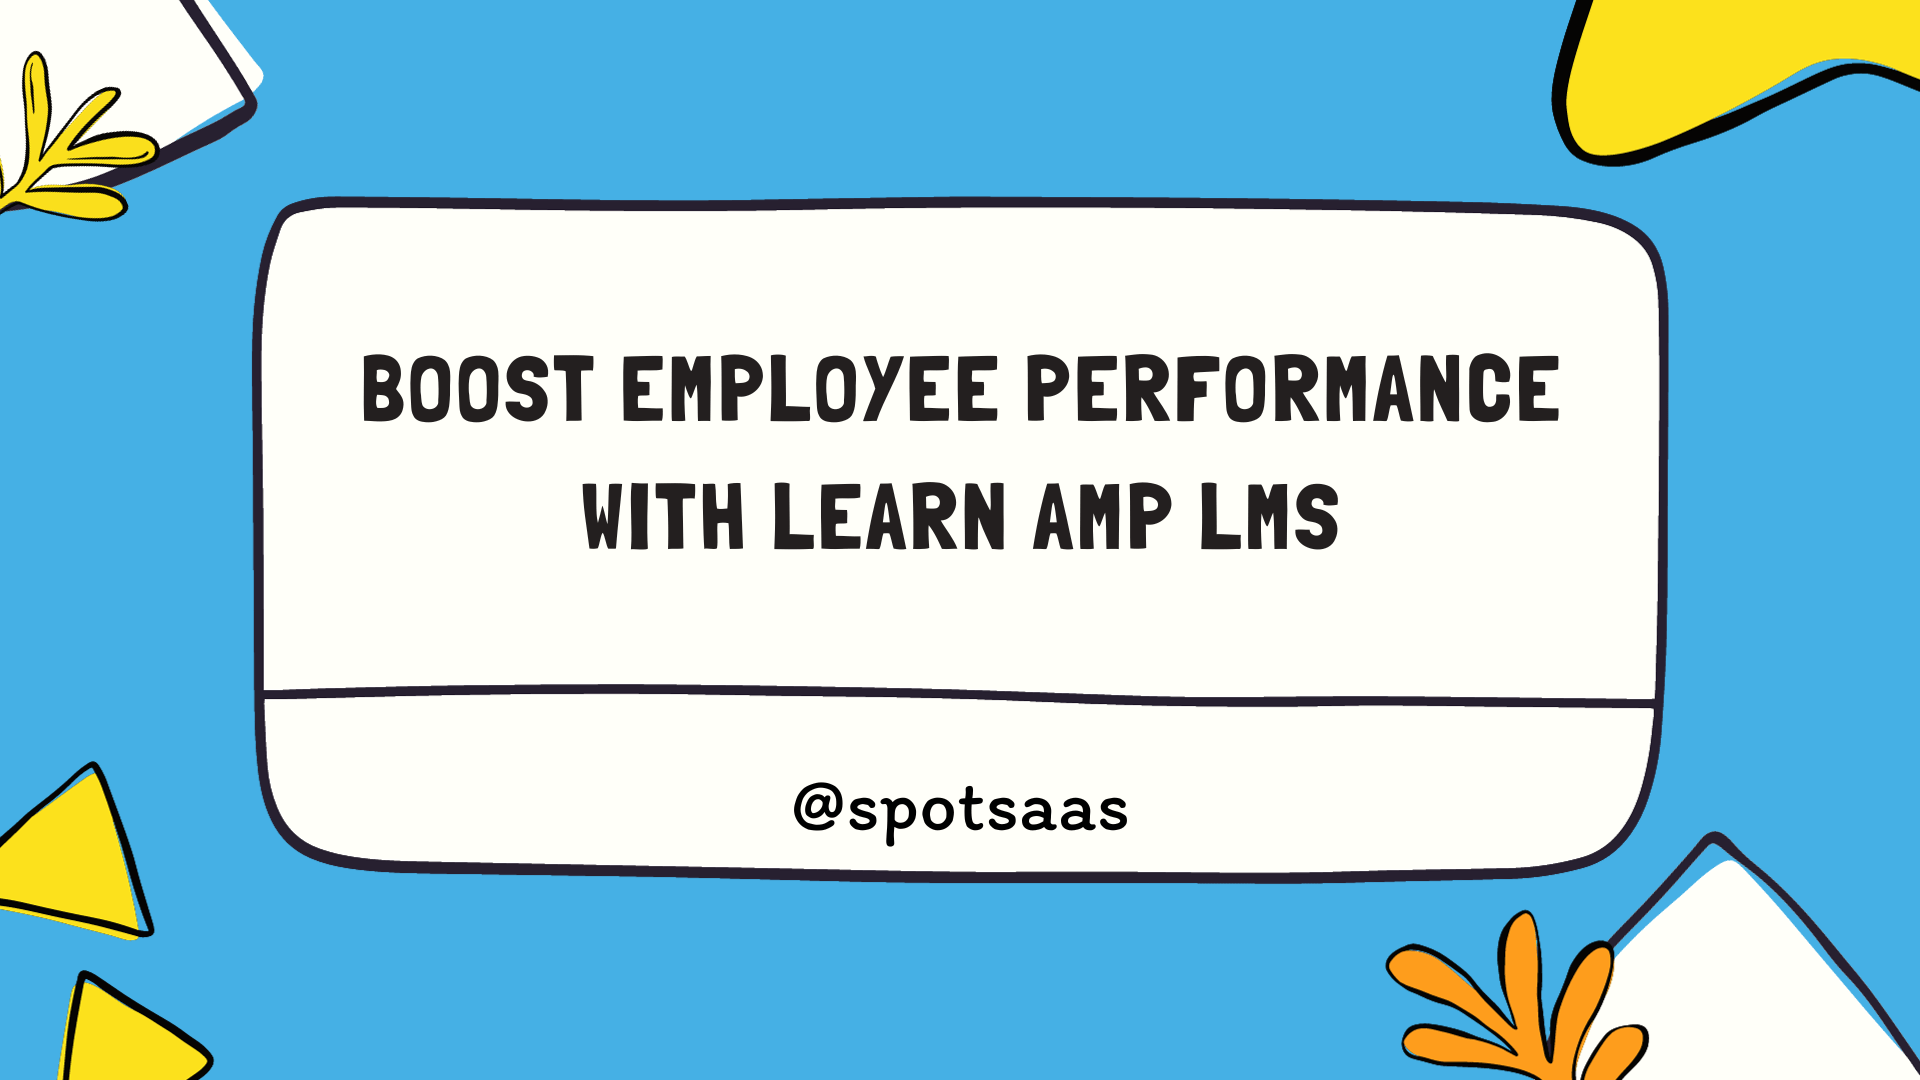 Learn AMP LMS